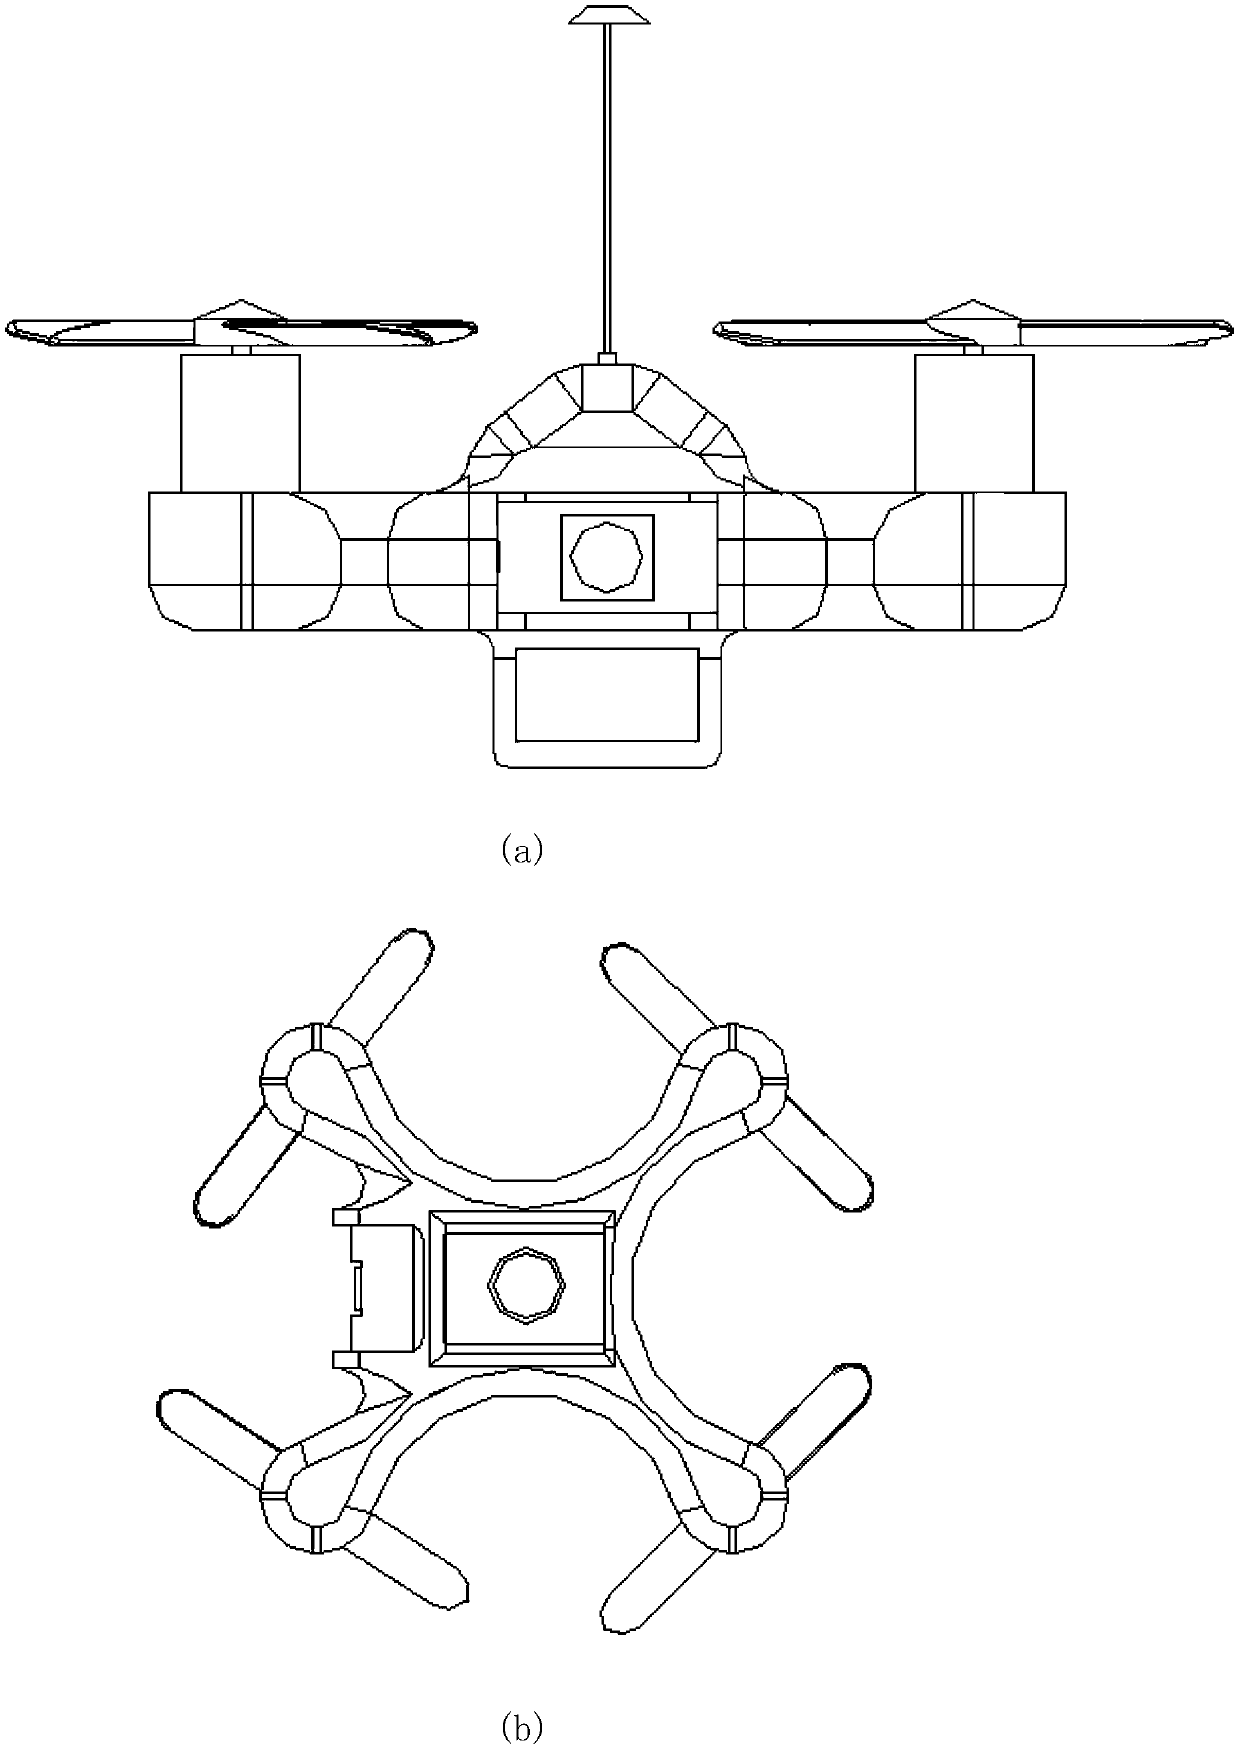 Target detection method based on micro-aircraft